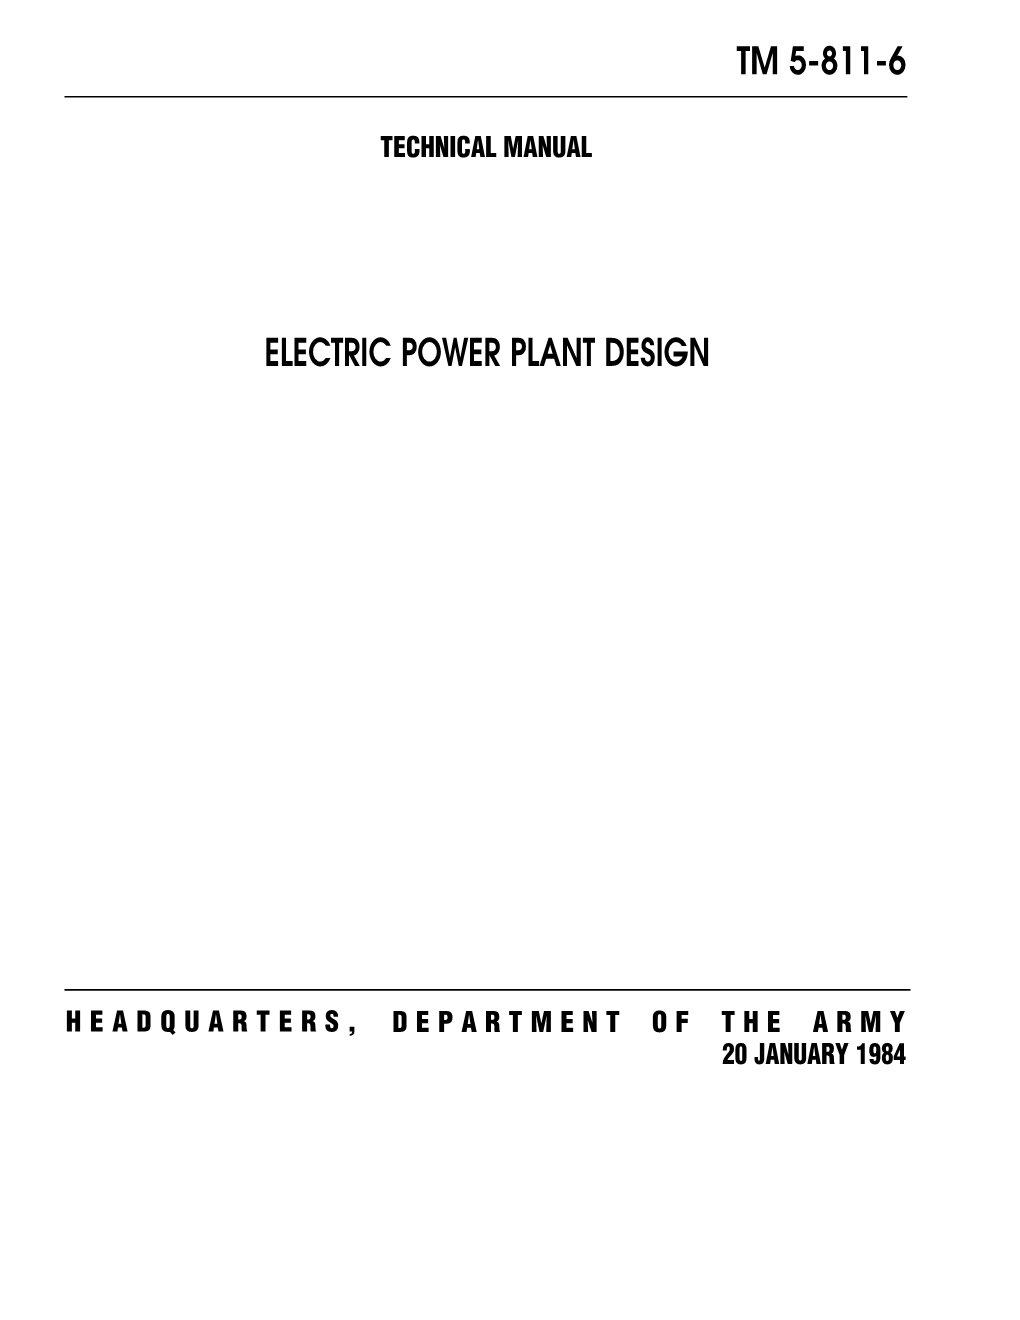 TM 5-811-6 Electric Power Plant Design